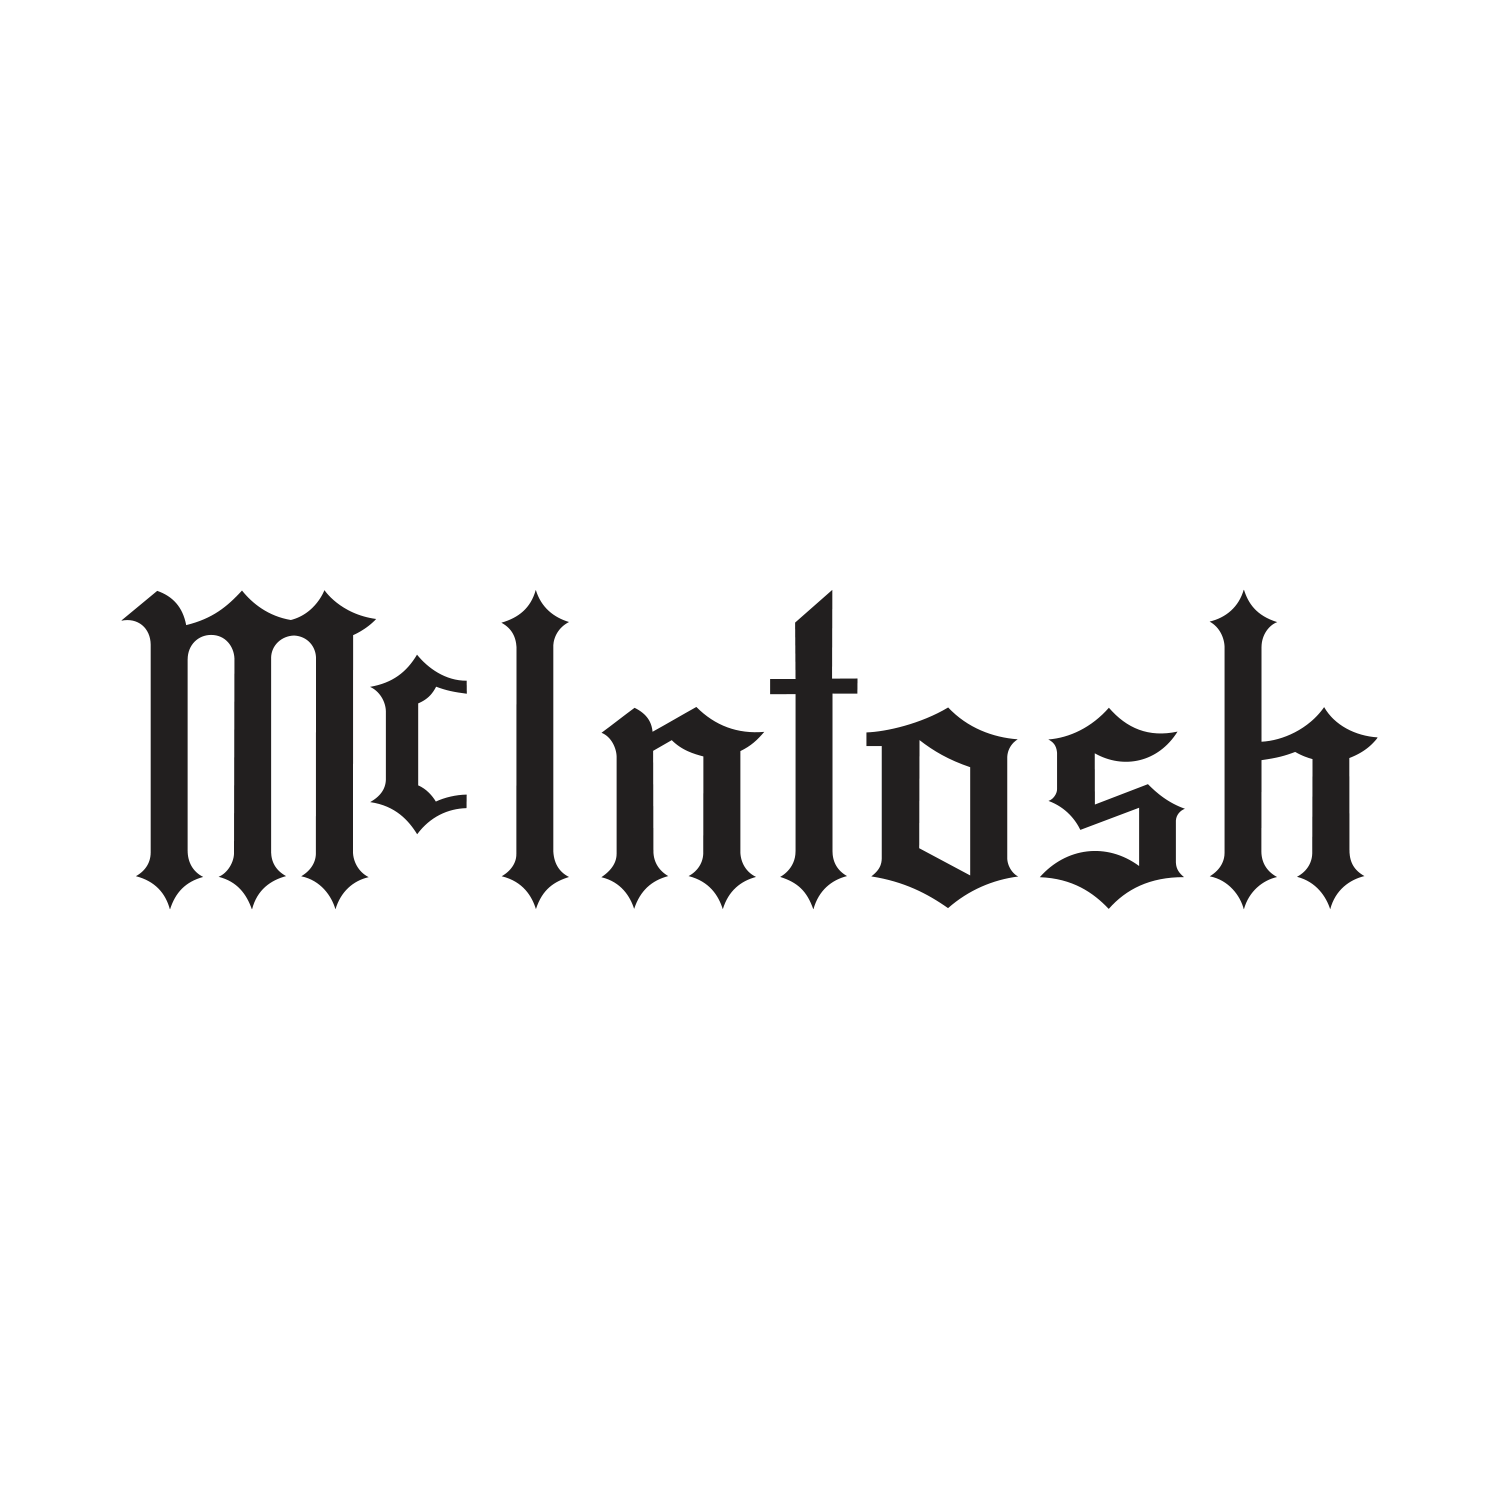 Logo McIntosh